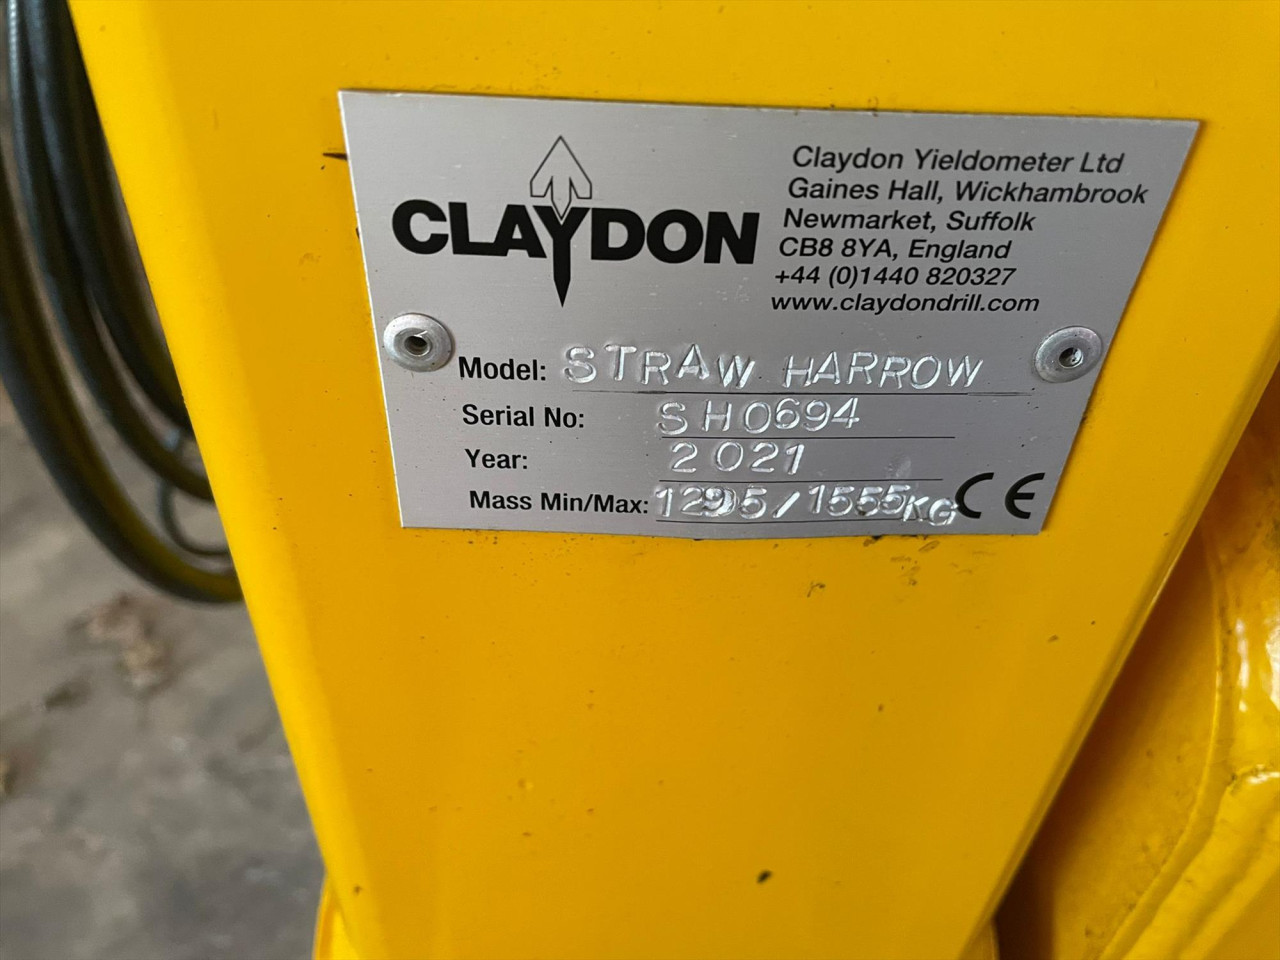 CLAYDON 7.5M STRAW HARROW